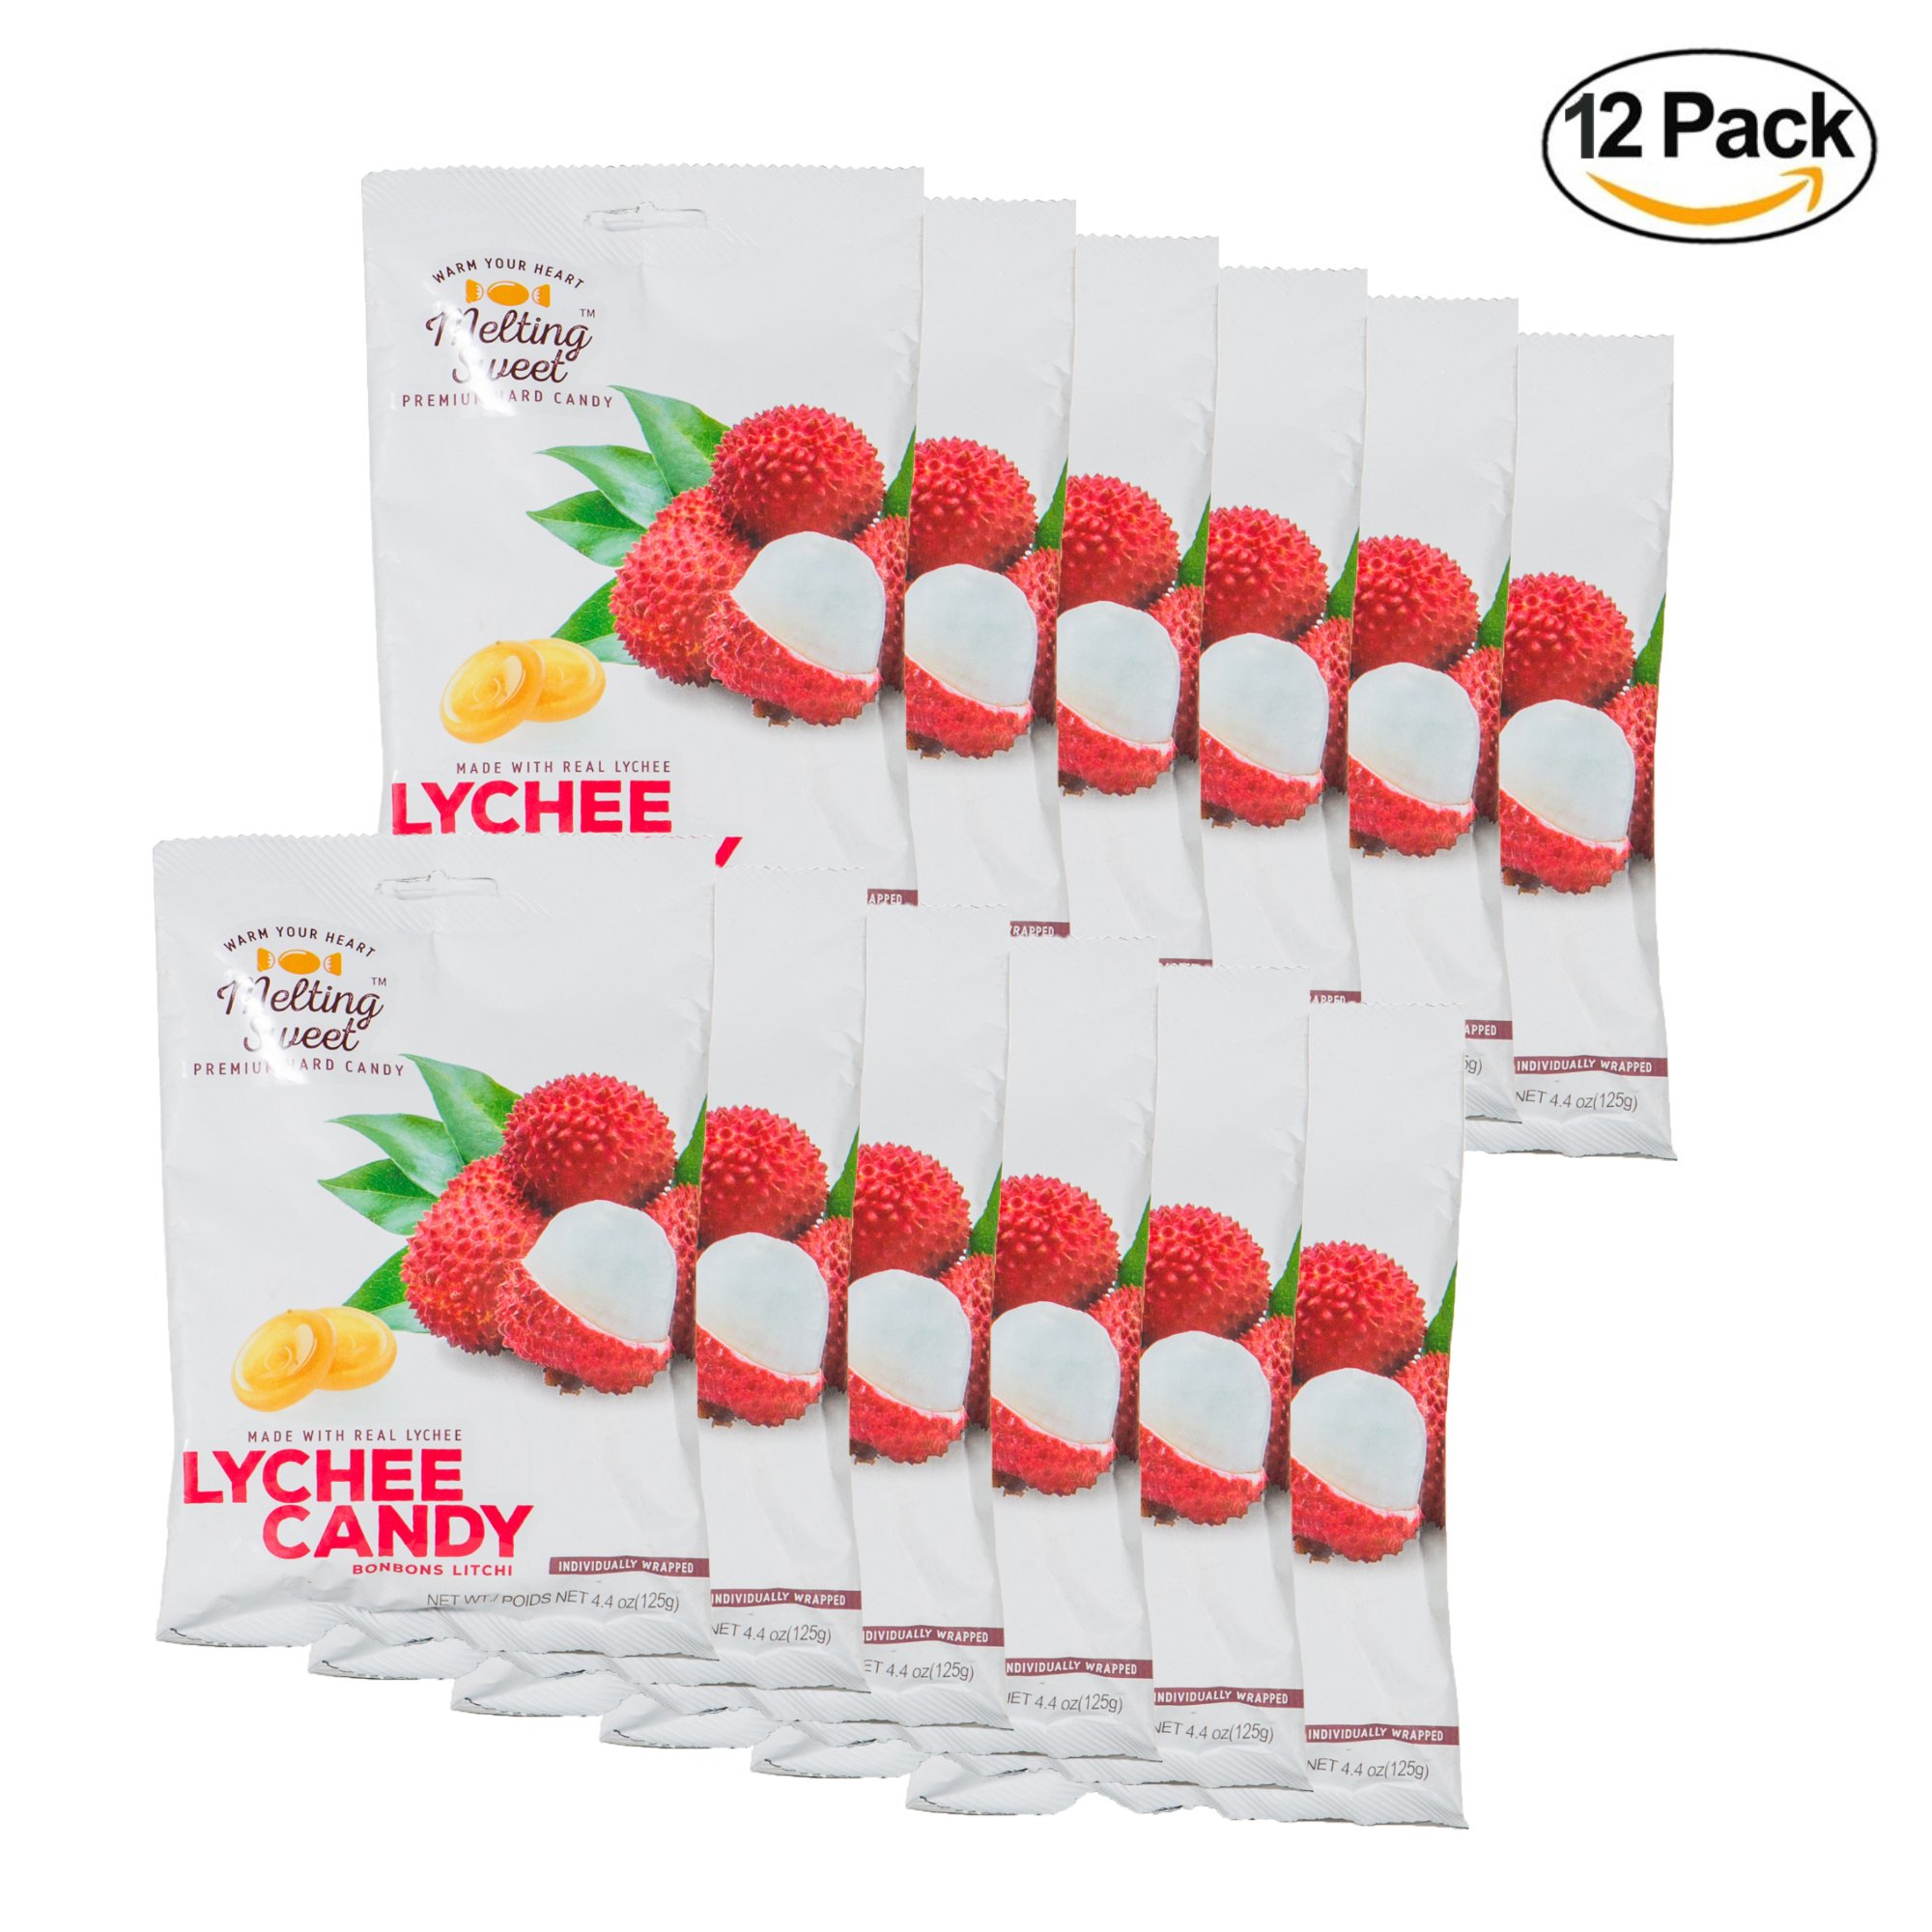 Melting Sweet Premium Individually Wrapped Hard Candy Ginger Coconut Lychee Ebay 9211